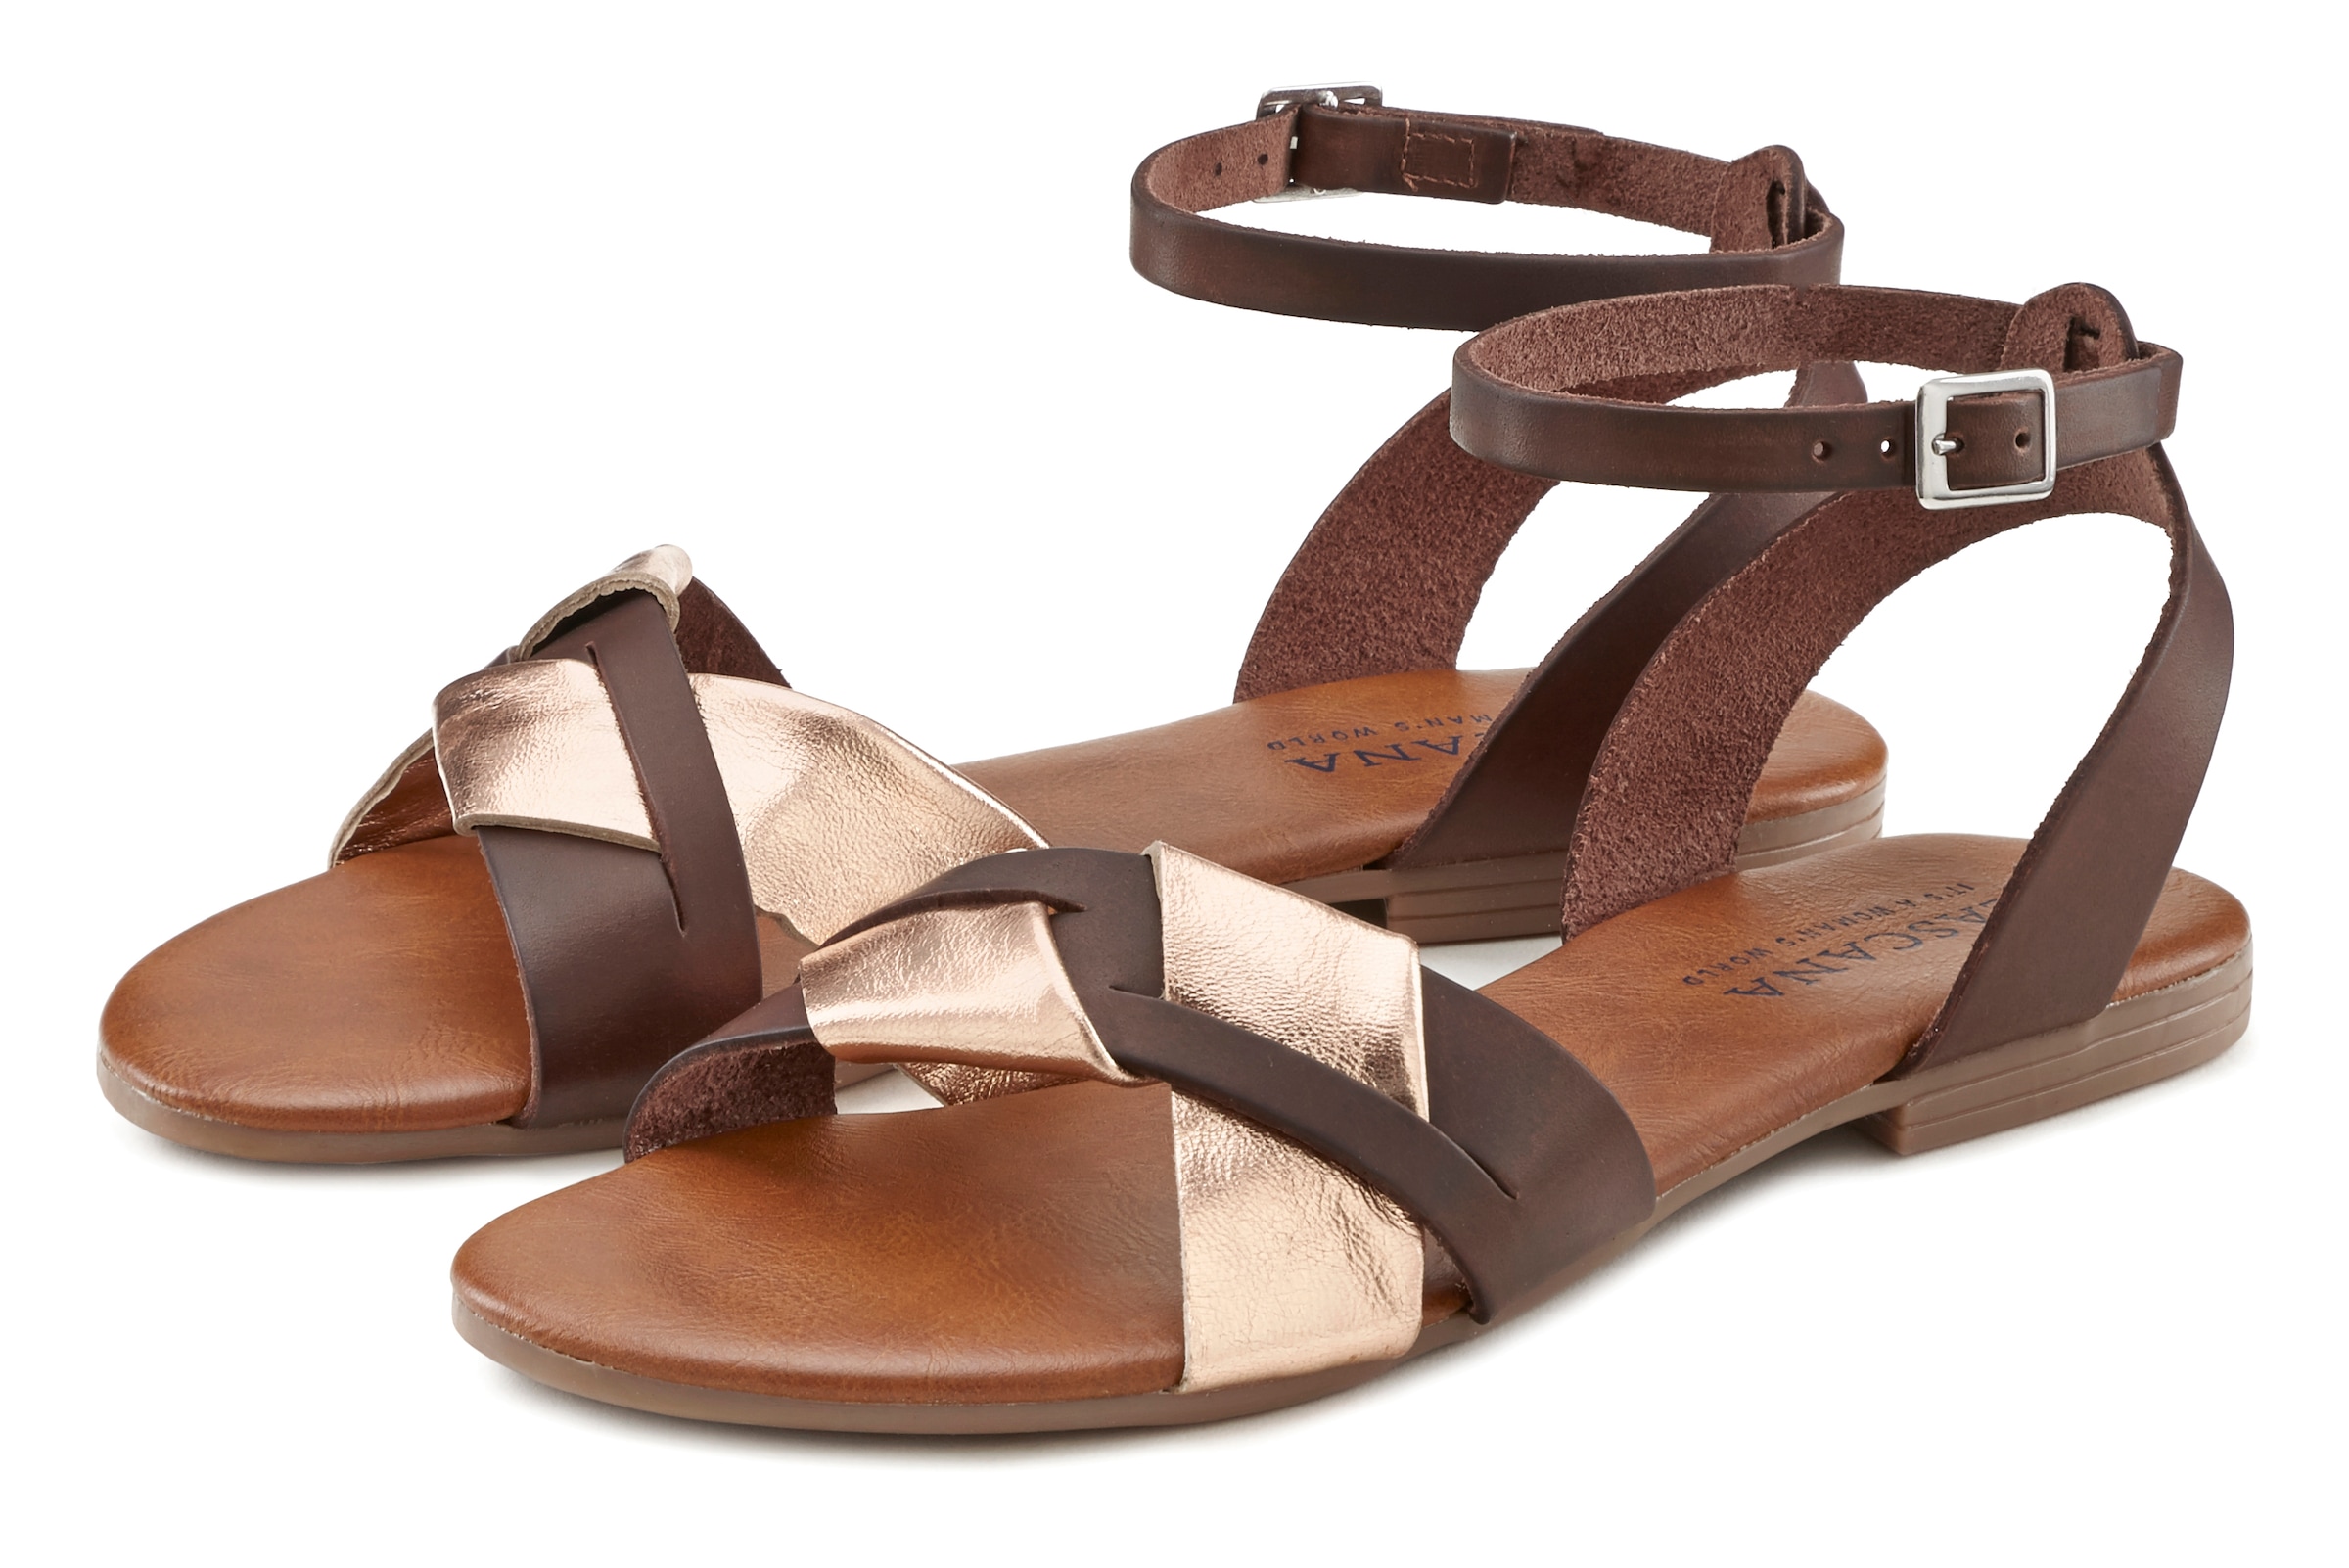 Sandale, Sandalette, Sommerschuh aus hochwertigem Leder mit Metallic Optik